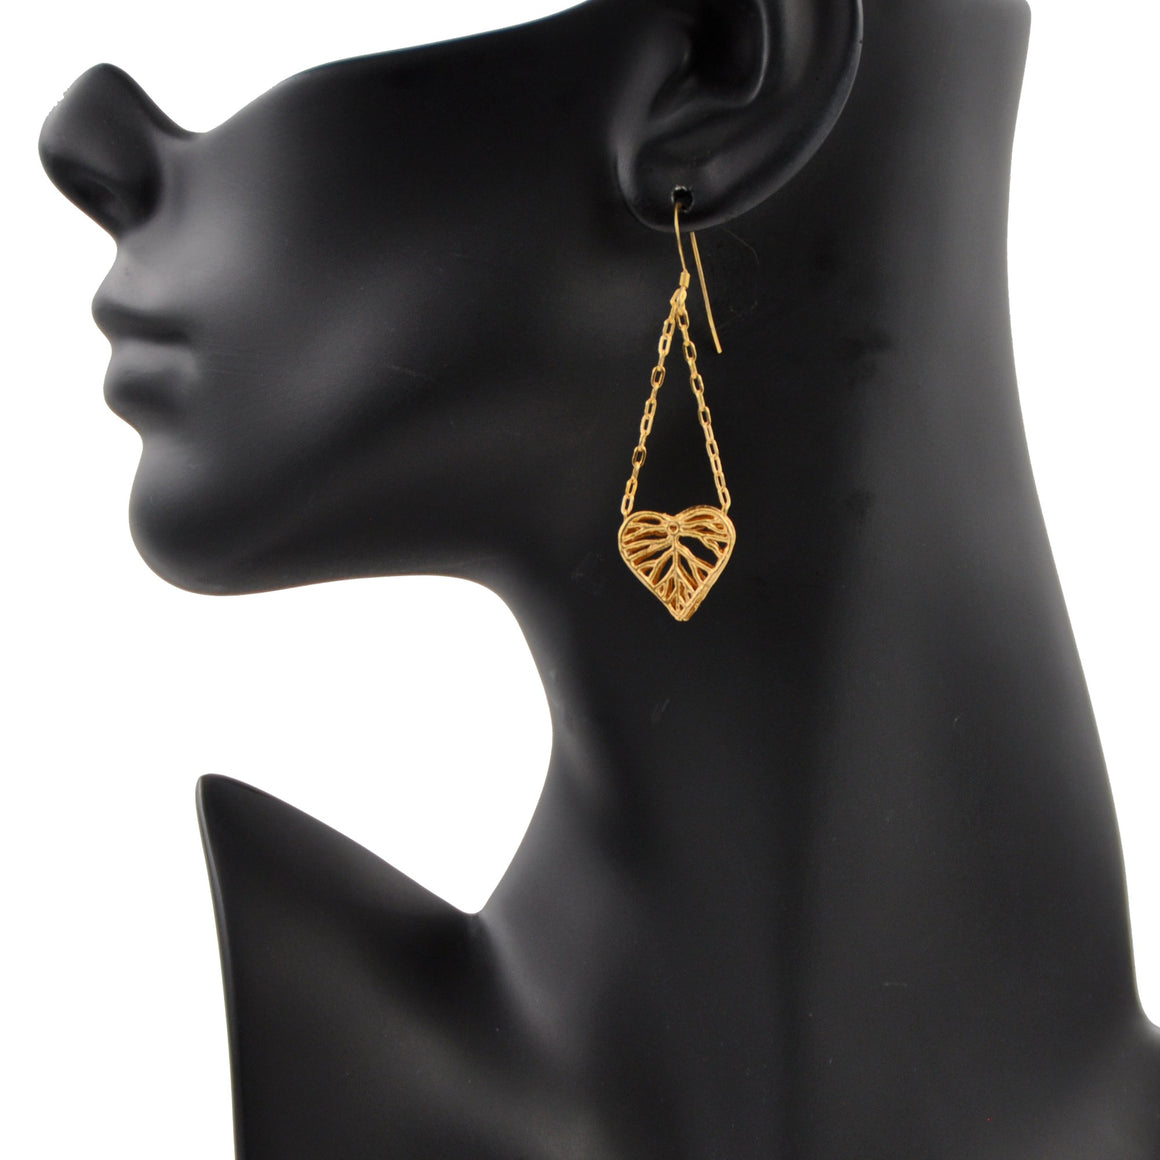 Heart Leaf Dimensional Dangling Earrings (Petite) - 24K Gold Plated